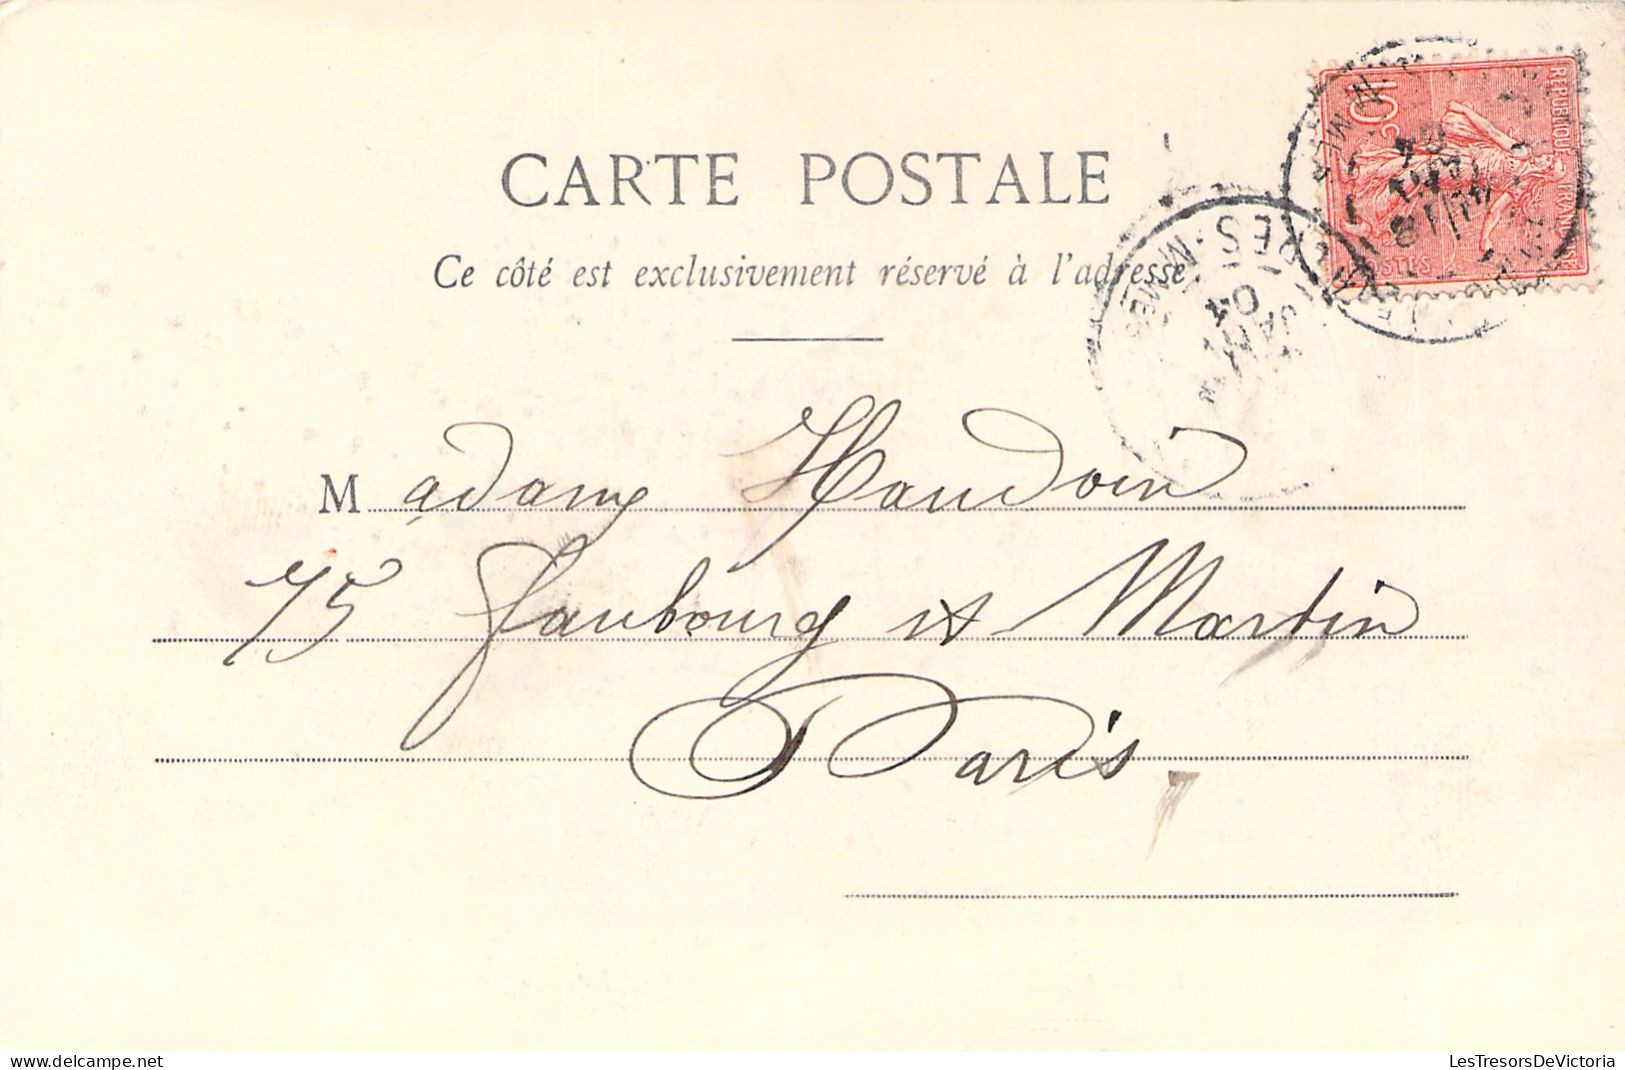 FRANCE - Beaulieu - Grand Hotel Metropole - Colorisé - Carte Postale Ancienne - Beaulieu-sur-Mer